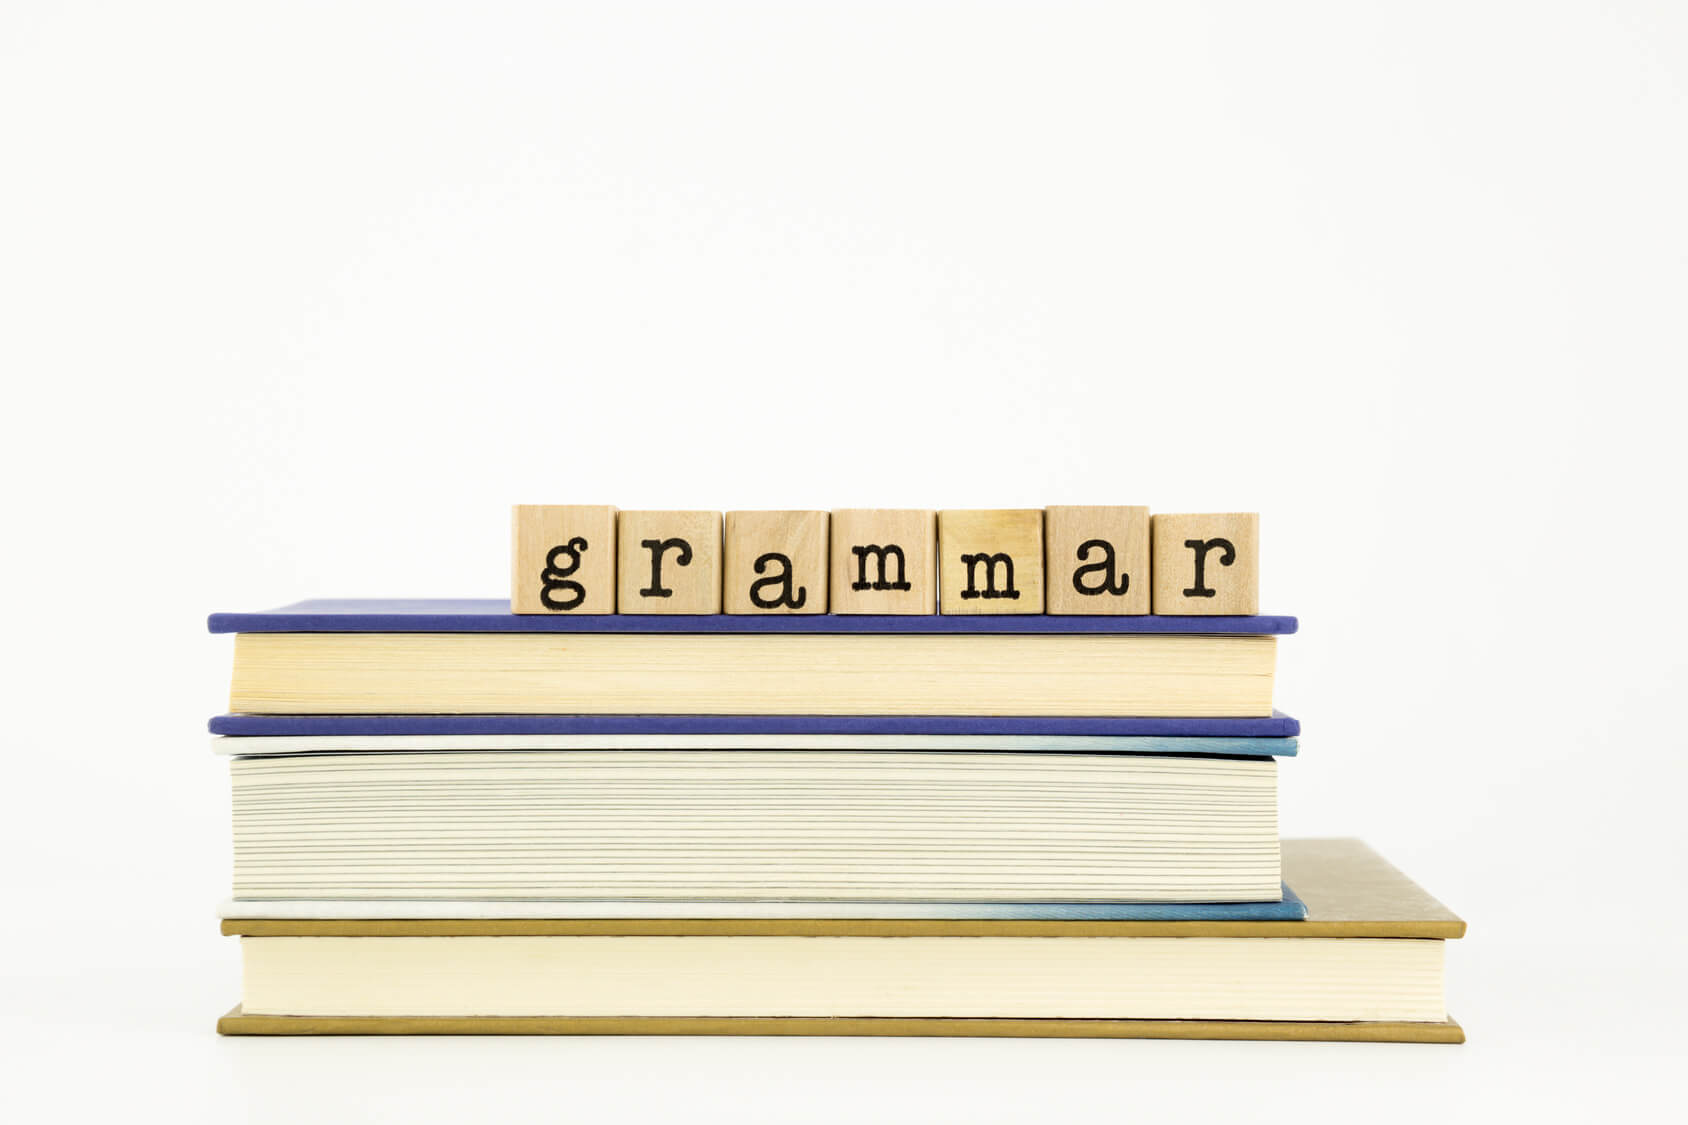 how to teach grammar